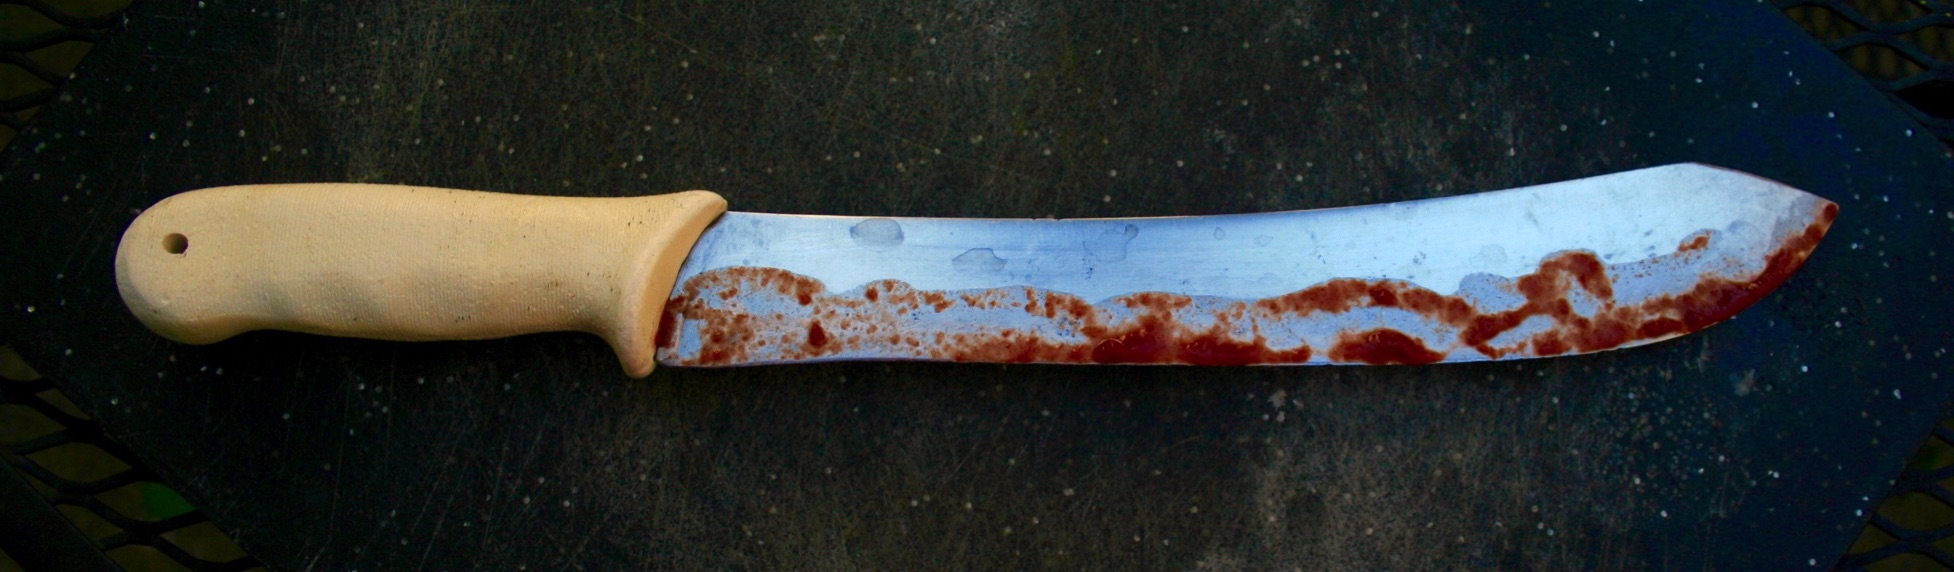 Dexter Russell EDGE-2 Hand Held 2-Stage Knife Sharpener